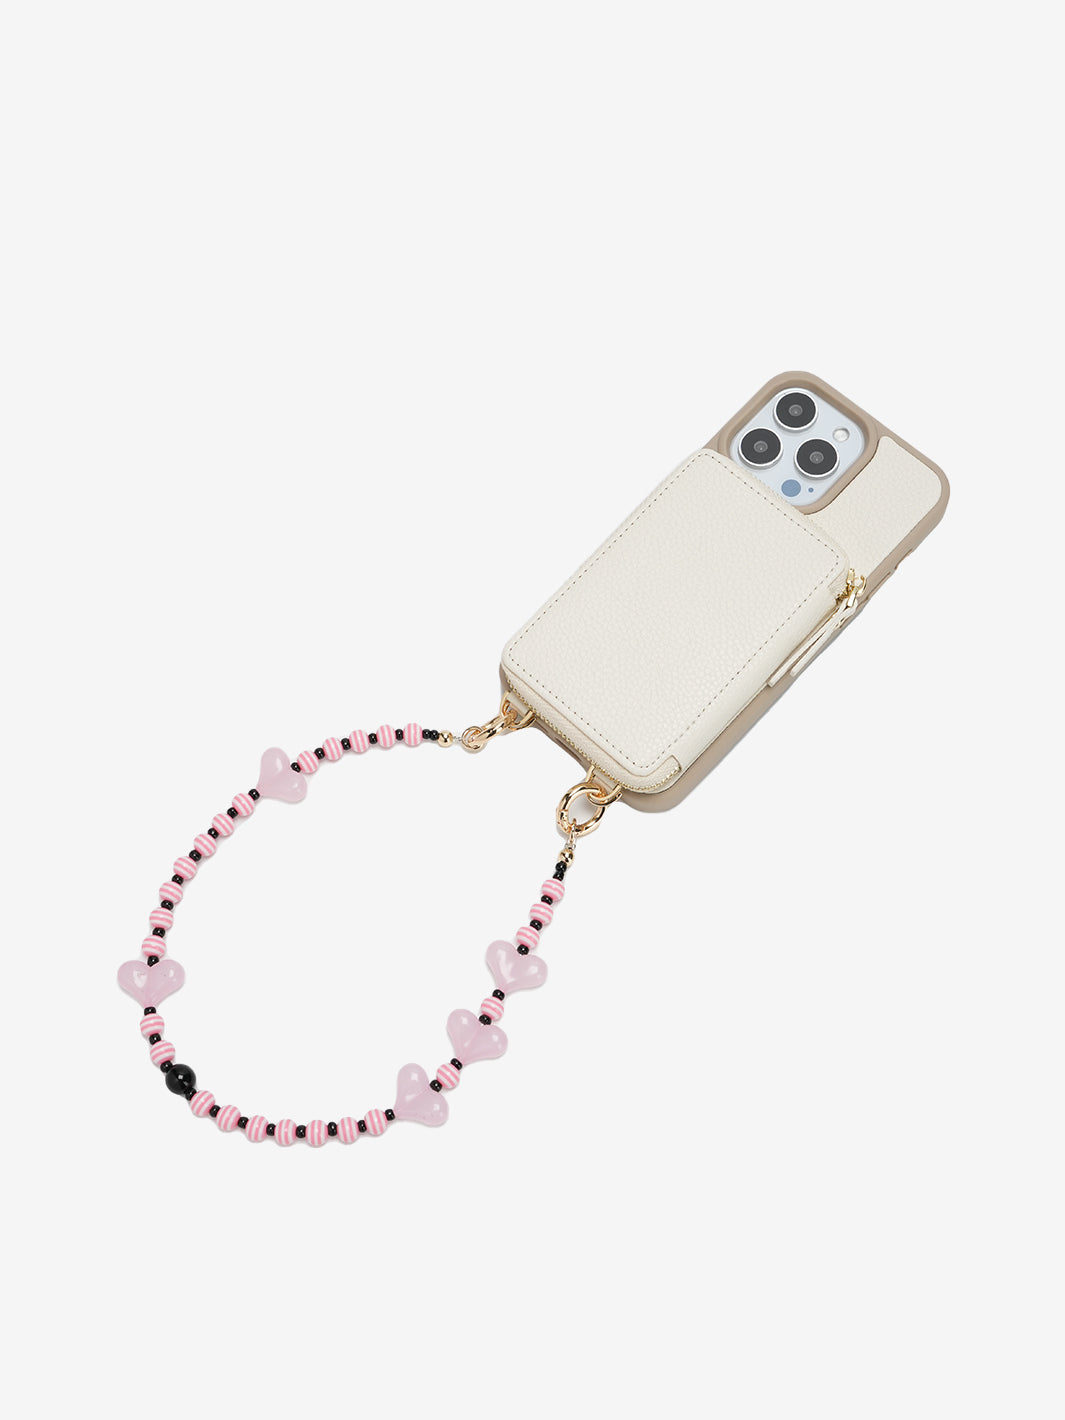 Gentleness Style- Pink Love Phone Case Wrist Strap